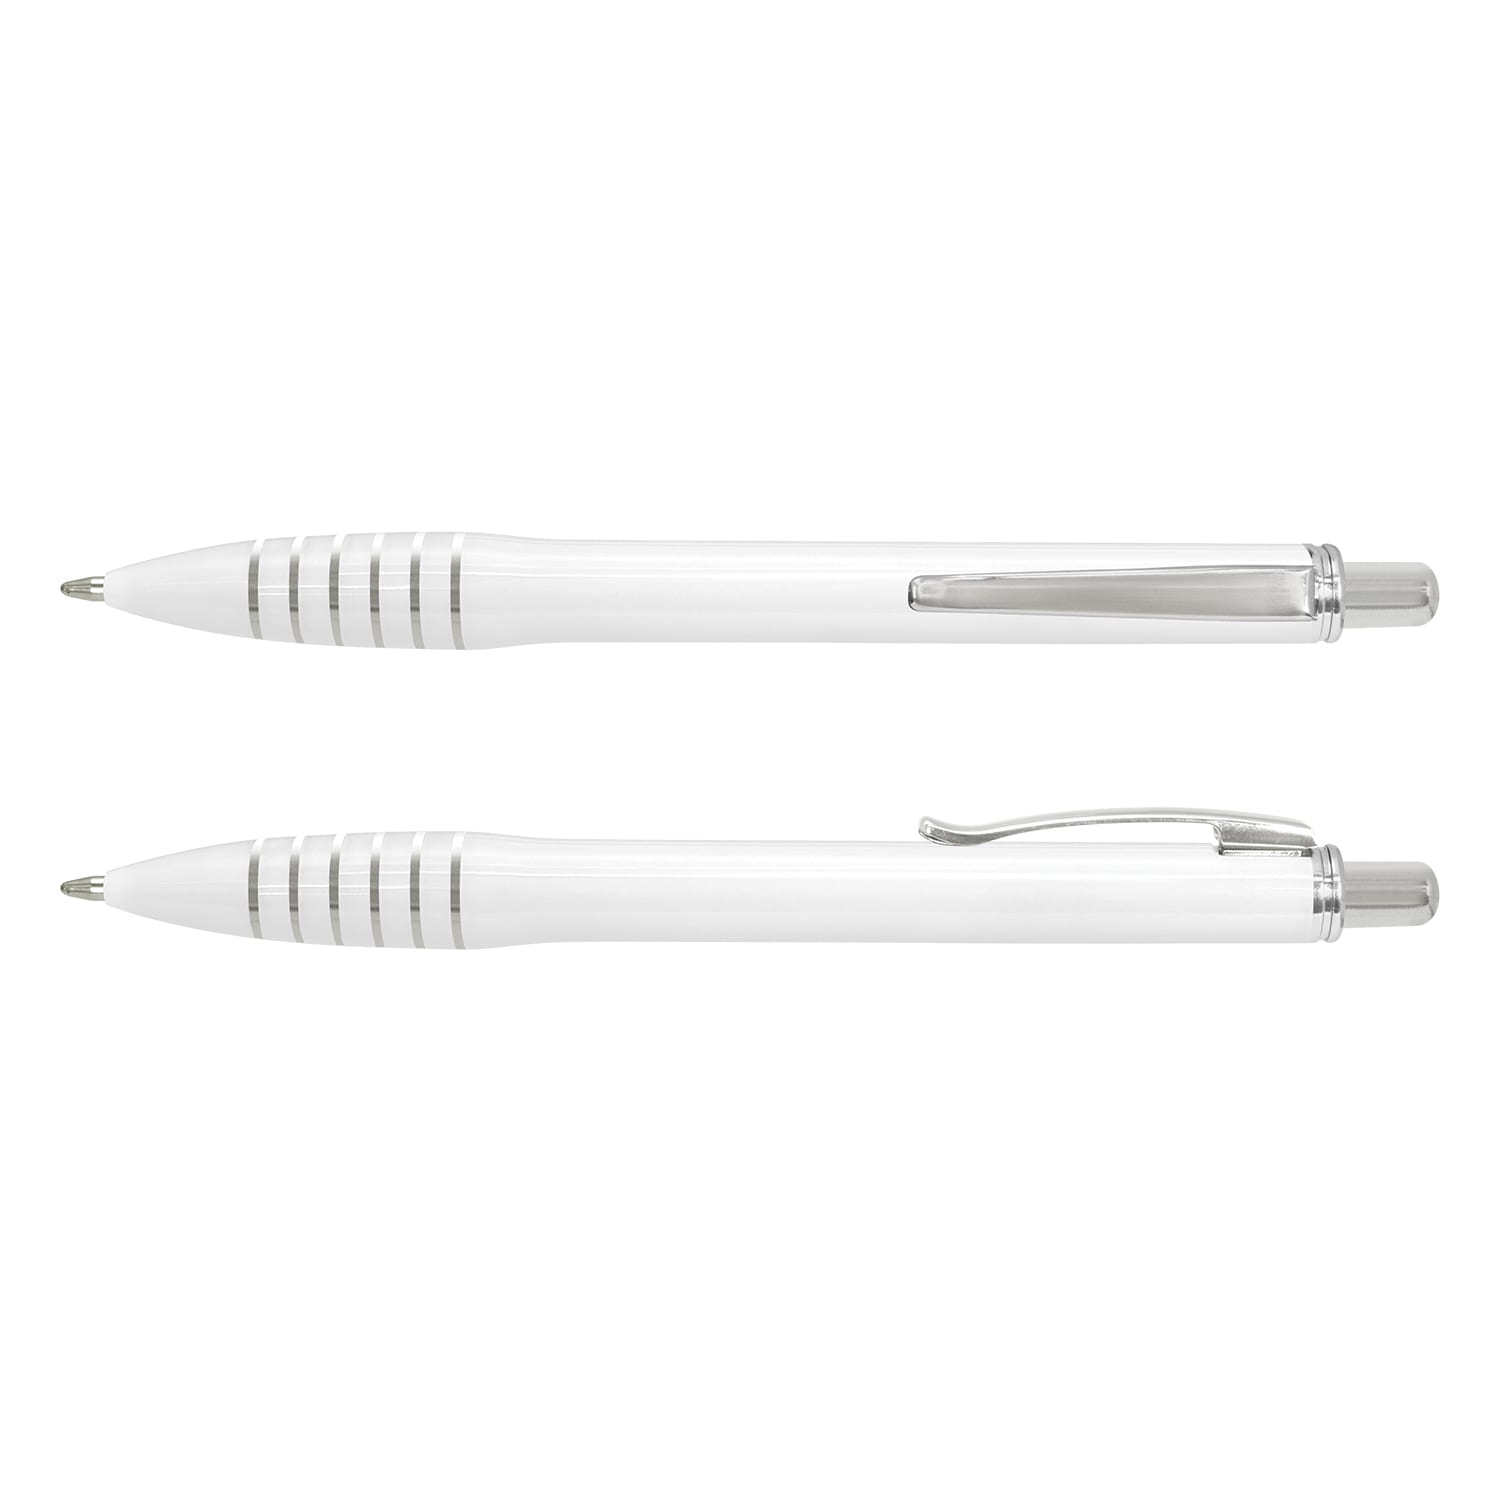 Plastic Vulcan Pen pen